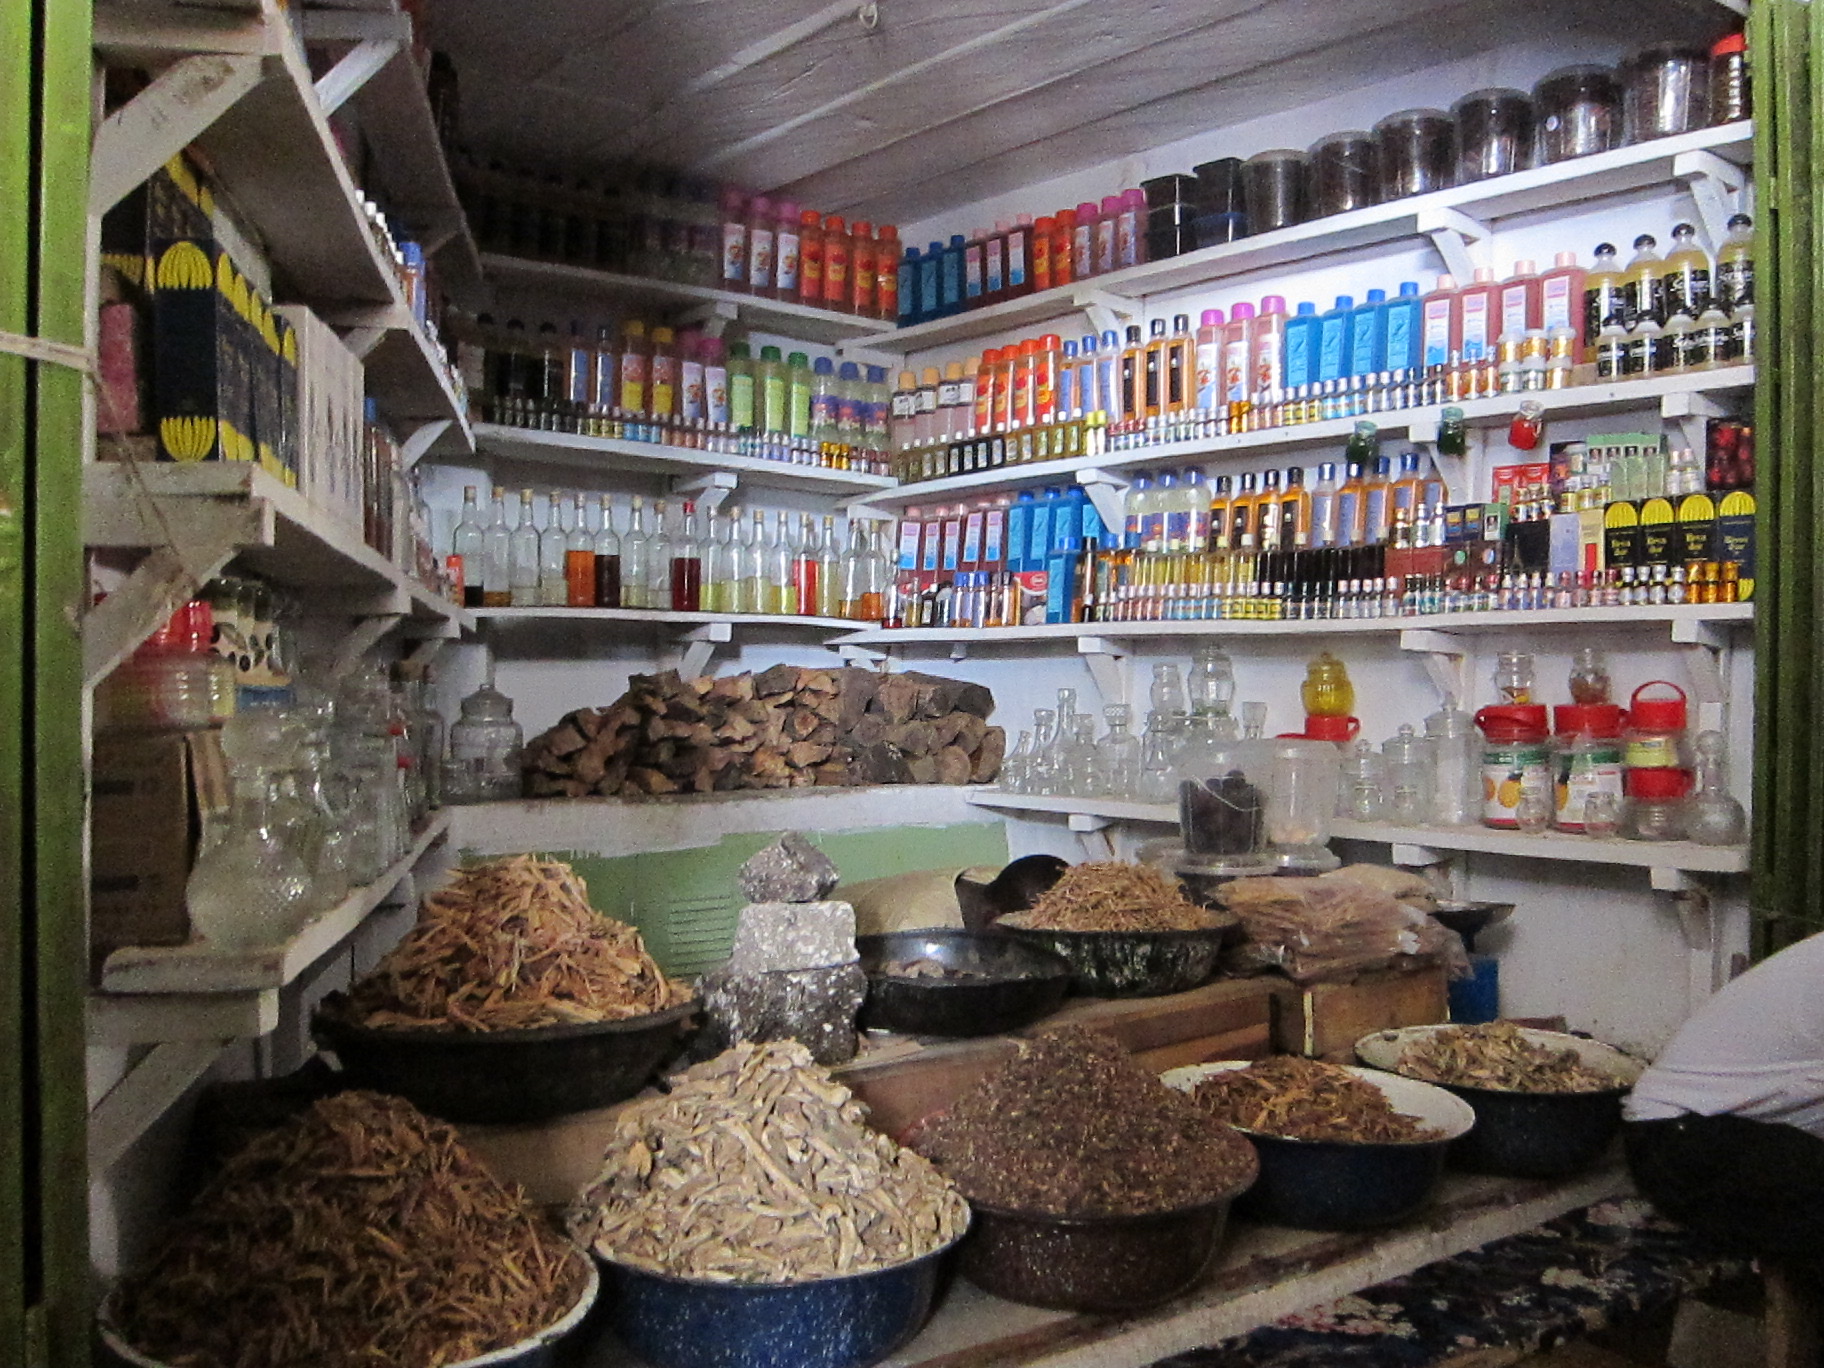 Turaren Wuta [Incense] ingredients. Maiduguri, Nigeria.(Photo taken by Katie Rhine)